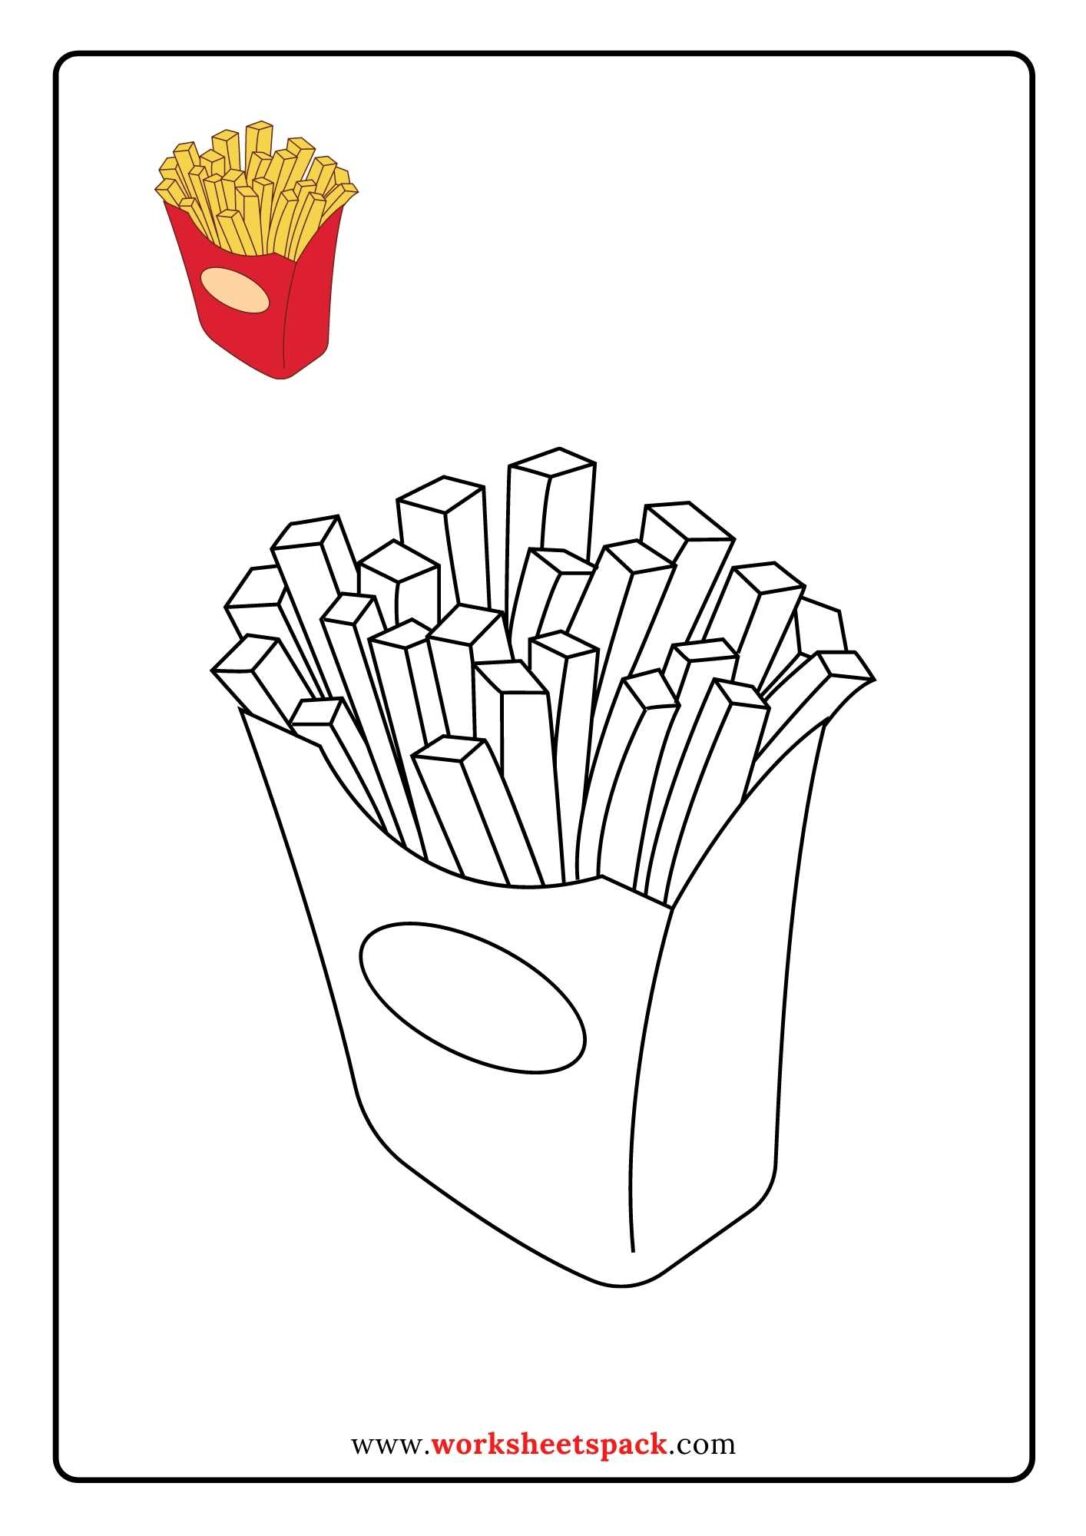 Free Food and Drink Coloring Pages PDF - worksheetspack